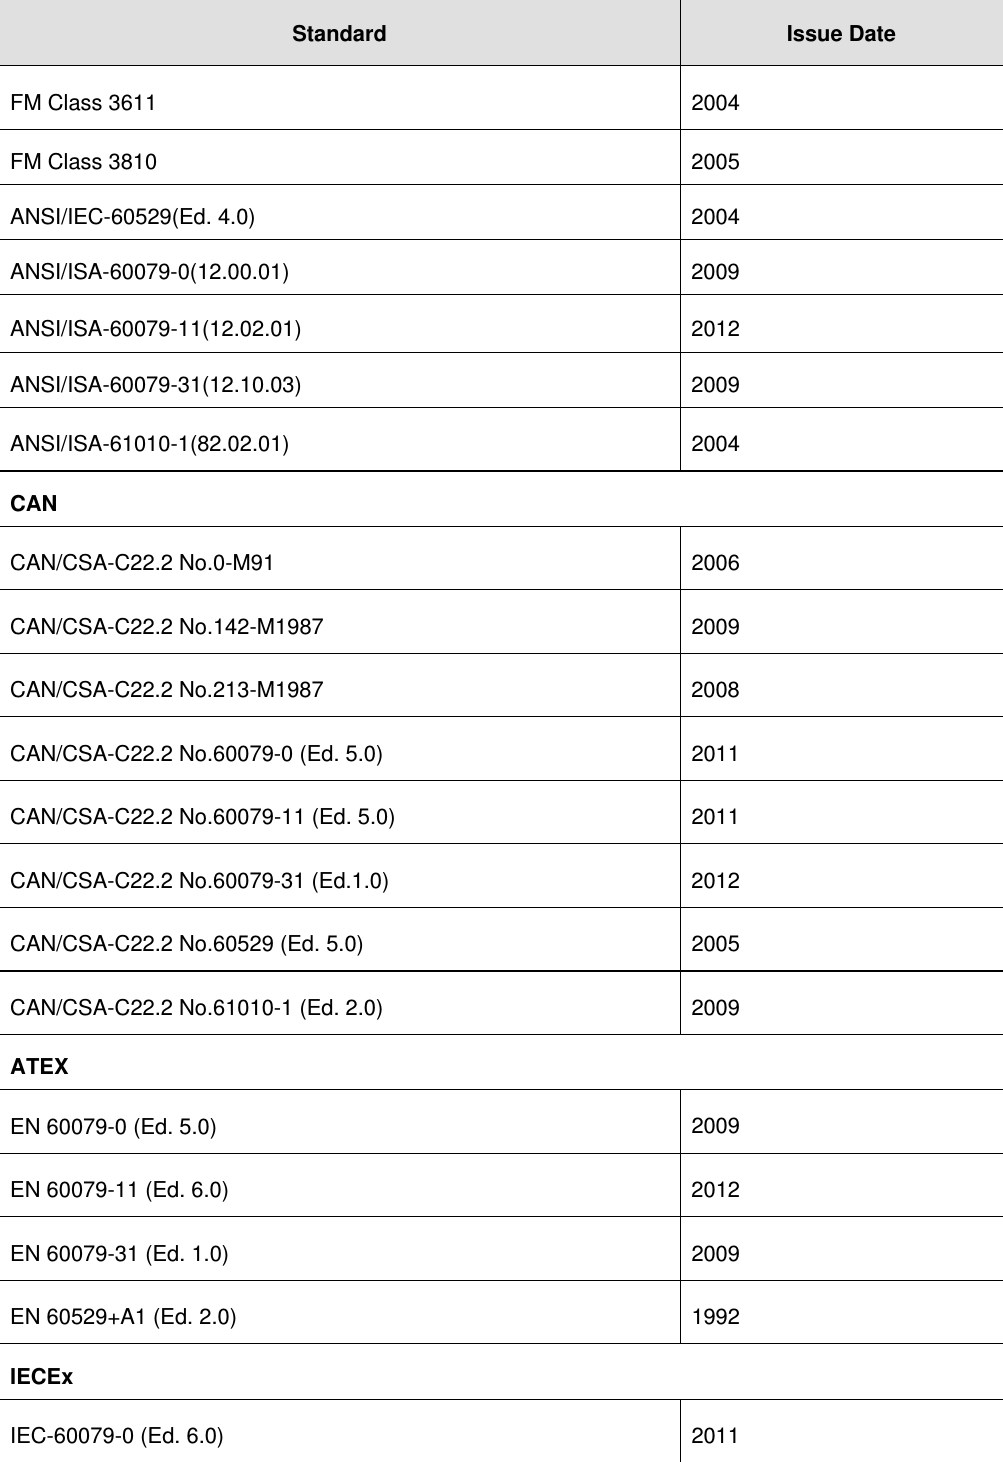  Standard  Issue Date FM Class 3611  2004 FM Class 3810  2005 ANSI/IEC-60529(Ed. 4.0)  2004 ANSI/ISA-60079-0(12.00.01) 2009 ANSI/ISA-60079-11(12.02.01) 2012 ANSI/ISA-60079-31(12.10.03) 2009 ANSI/ISA-61010-1(82.02.01)  2004 CAN CAN/CSA-C22.2 No.0-M91  2006 CAN/CSA-C22.2 No.142-M1987  2009 CAN/CSA-C22.2 No.213-M1987  2008 CAN/CSA-C22.2 No.60079-0 (Ed. 5.0)  2011 CAN/CSA-C22.2 No.60079-11 (Ed. 5.0)  2011 CAN/CSA-C22.2 No.60079-31 (Ed.1.0)  2012 CAN/CSA-C22.2 No.60529 (Ed. 5.0)  2005 CAN/CSA-C22.2 No.61010-1 (Ed. 2.0)  2009 ATEX EN 60079-0 (Ed. 5.0)  2009 EN 60079-11 (Ed. 6.0)  2012 EN 60079-31 (Ed. 1.0)  2009 EN 60529+A1 (Ed. 2.0)  1992 IECEx IEC-60079-0 (Ed. 6.0)  2011 